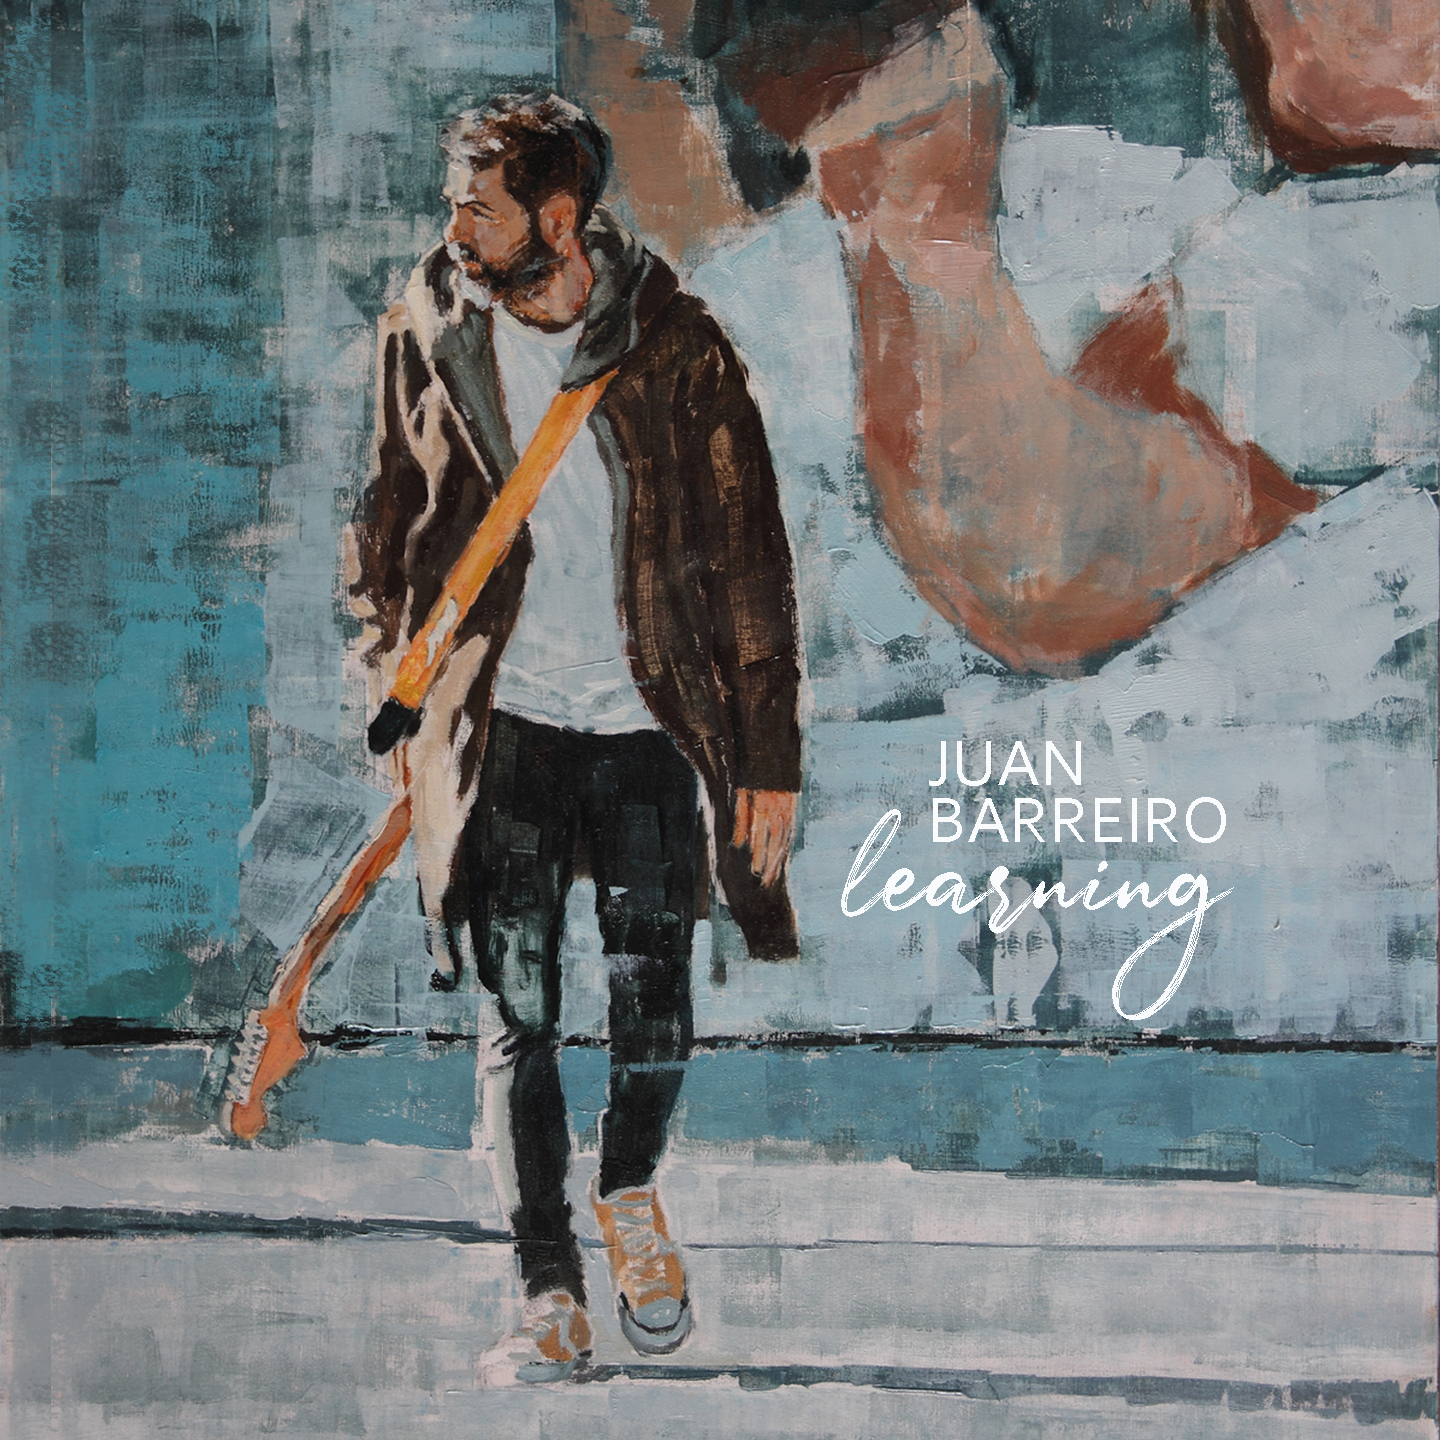 Juan Barreiro "Learning", nuevo álbum